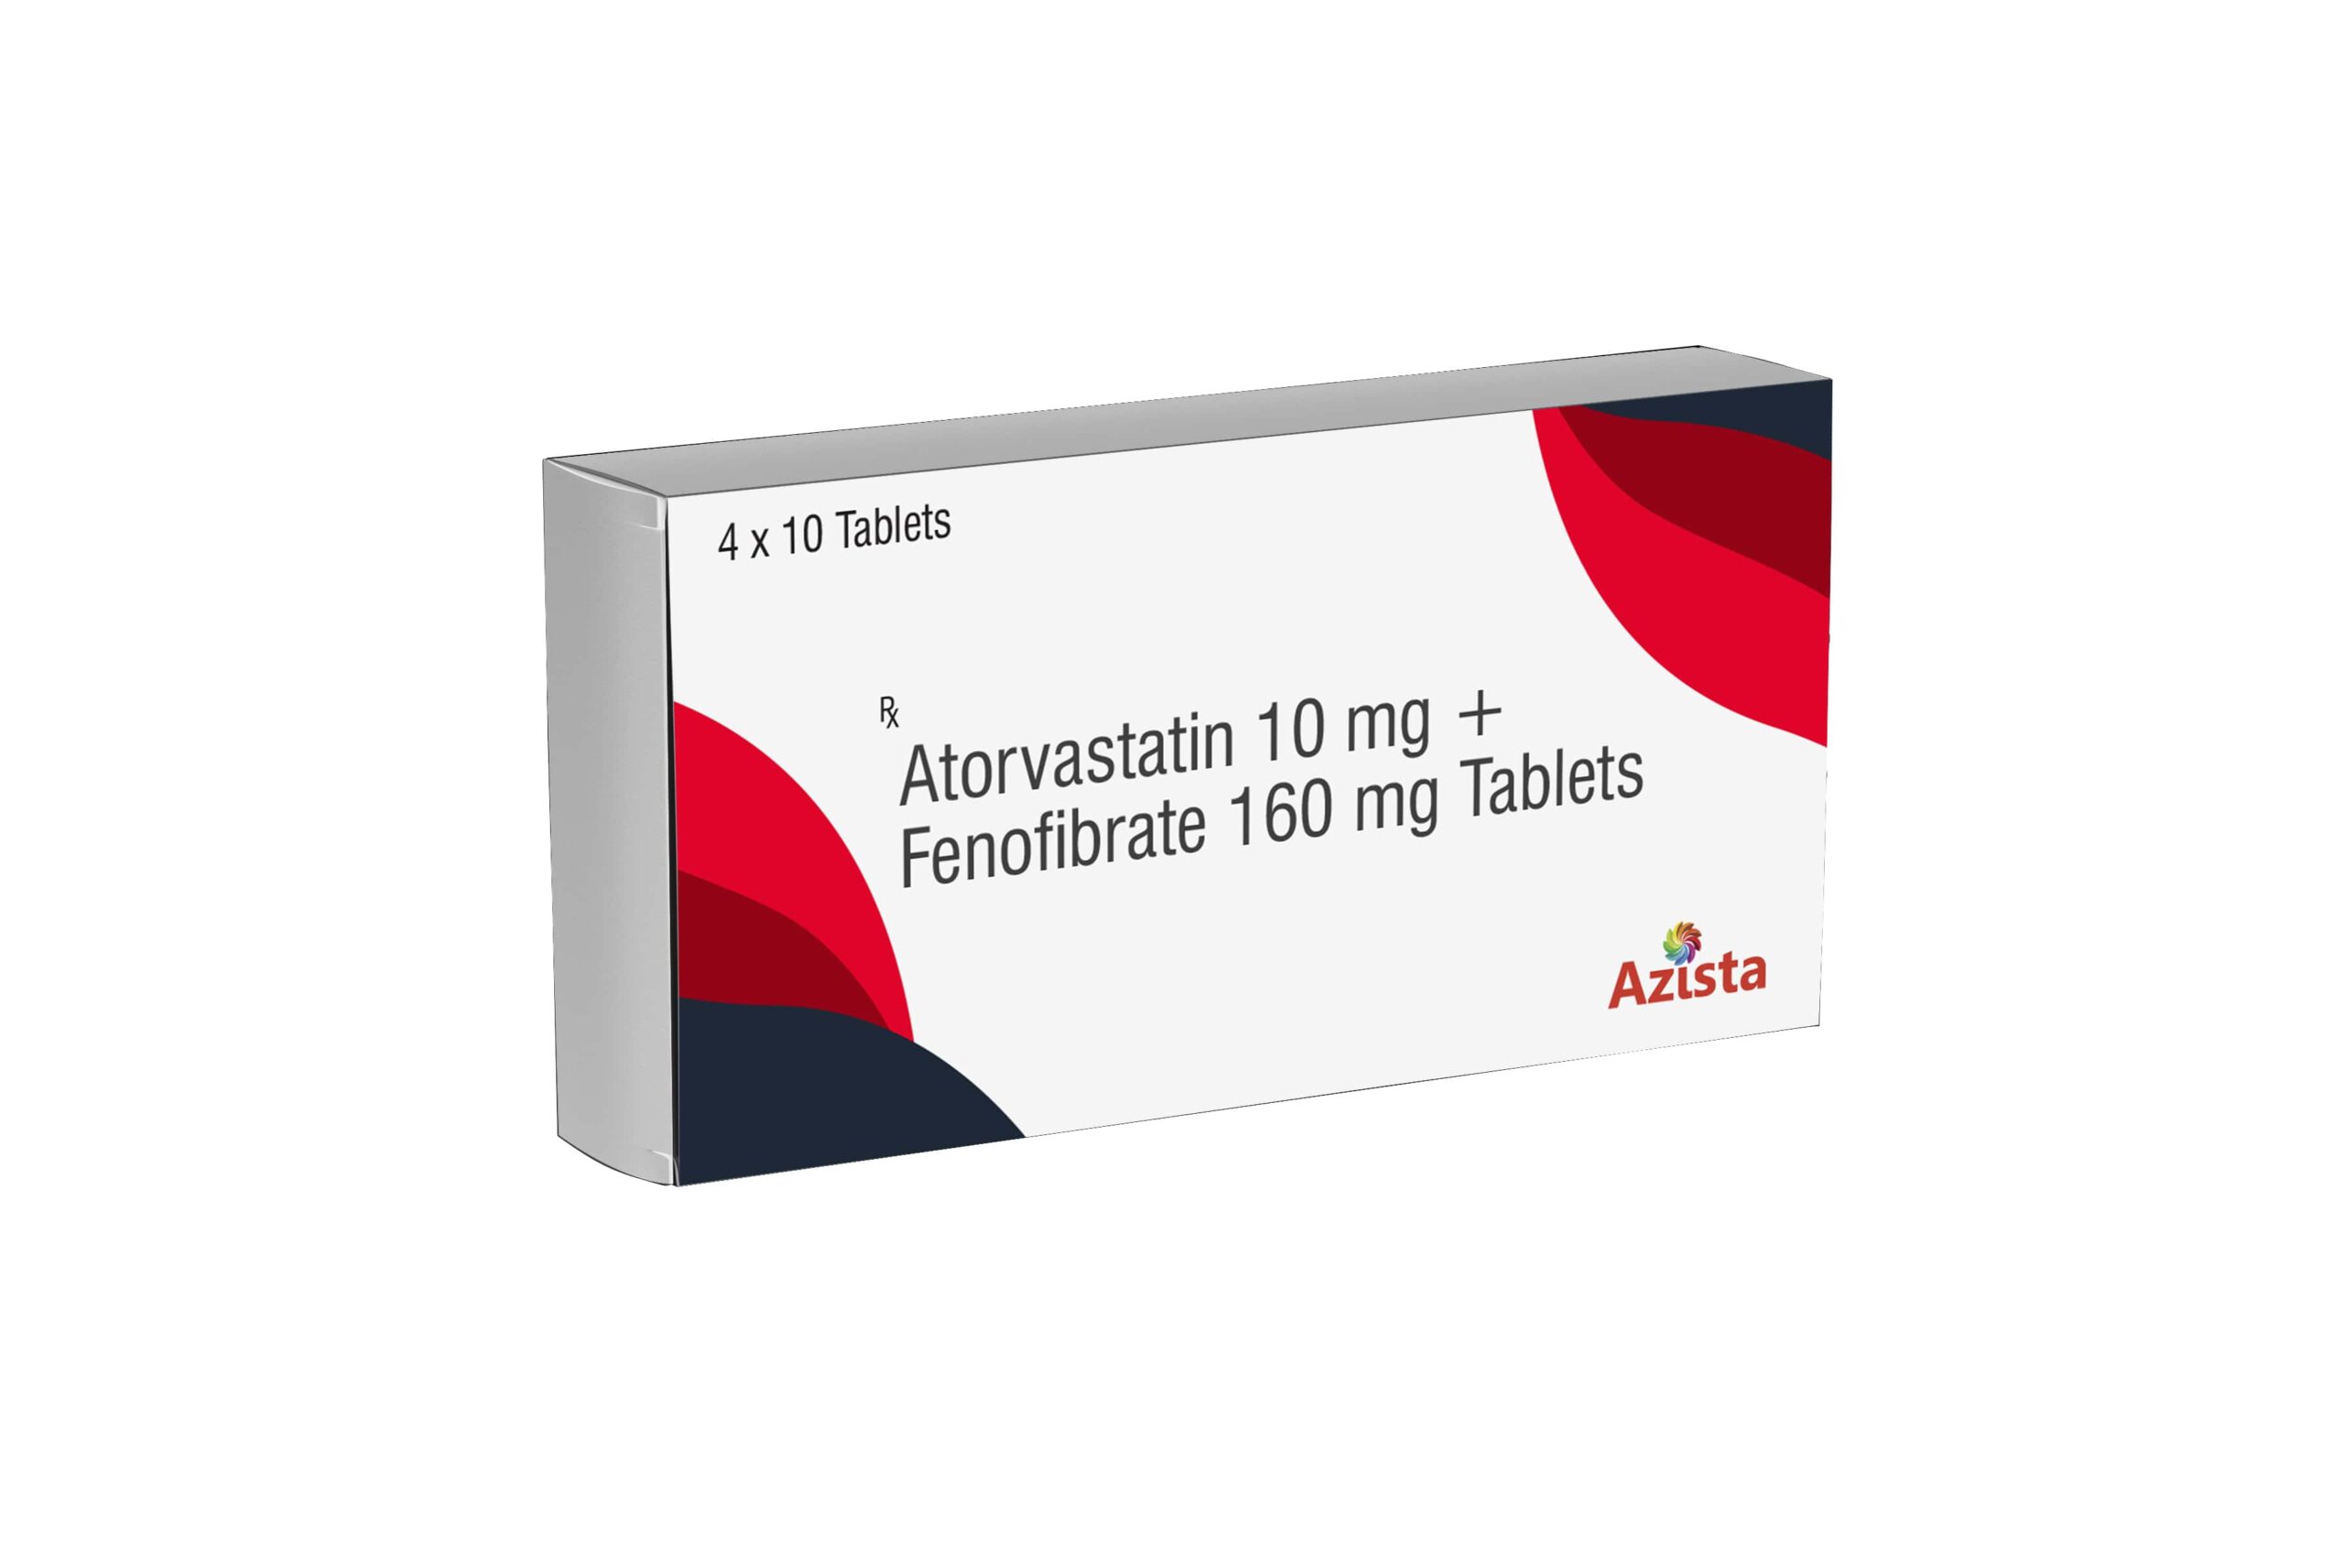 Atorvastatin 10mg and Fenofibrate 160mg Tablets